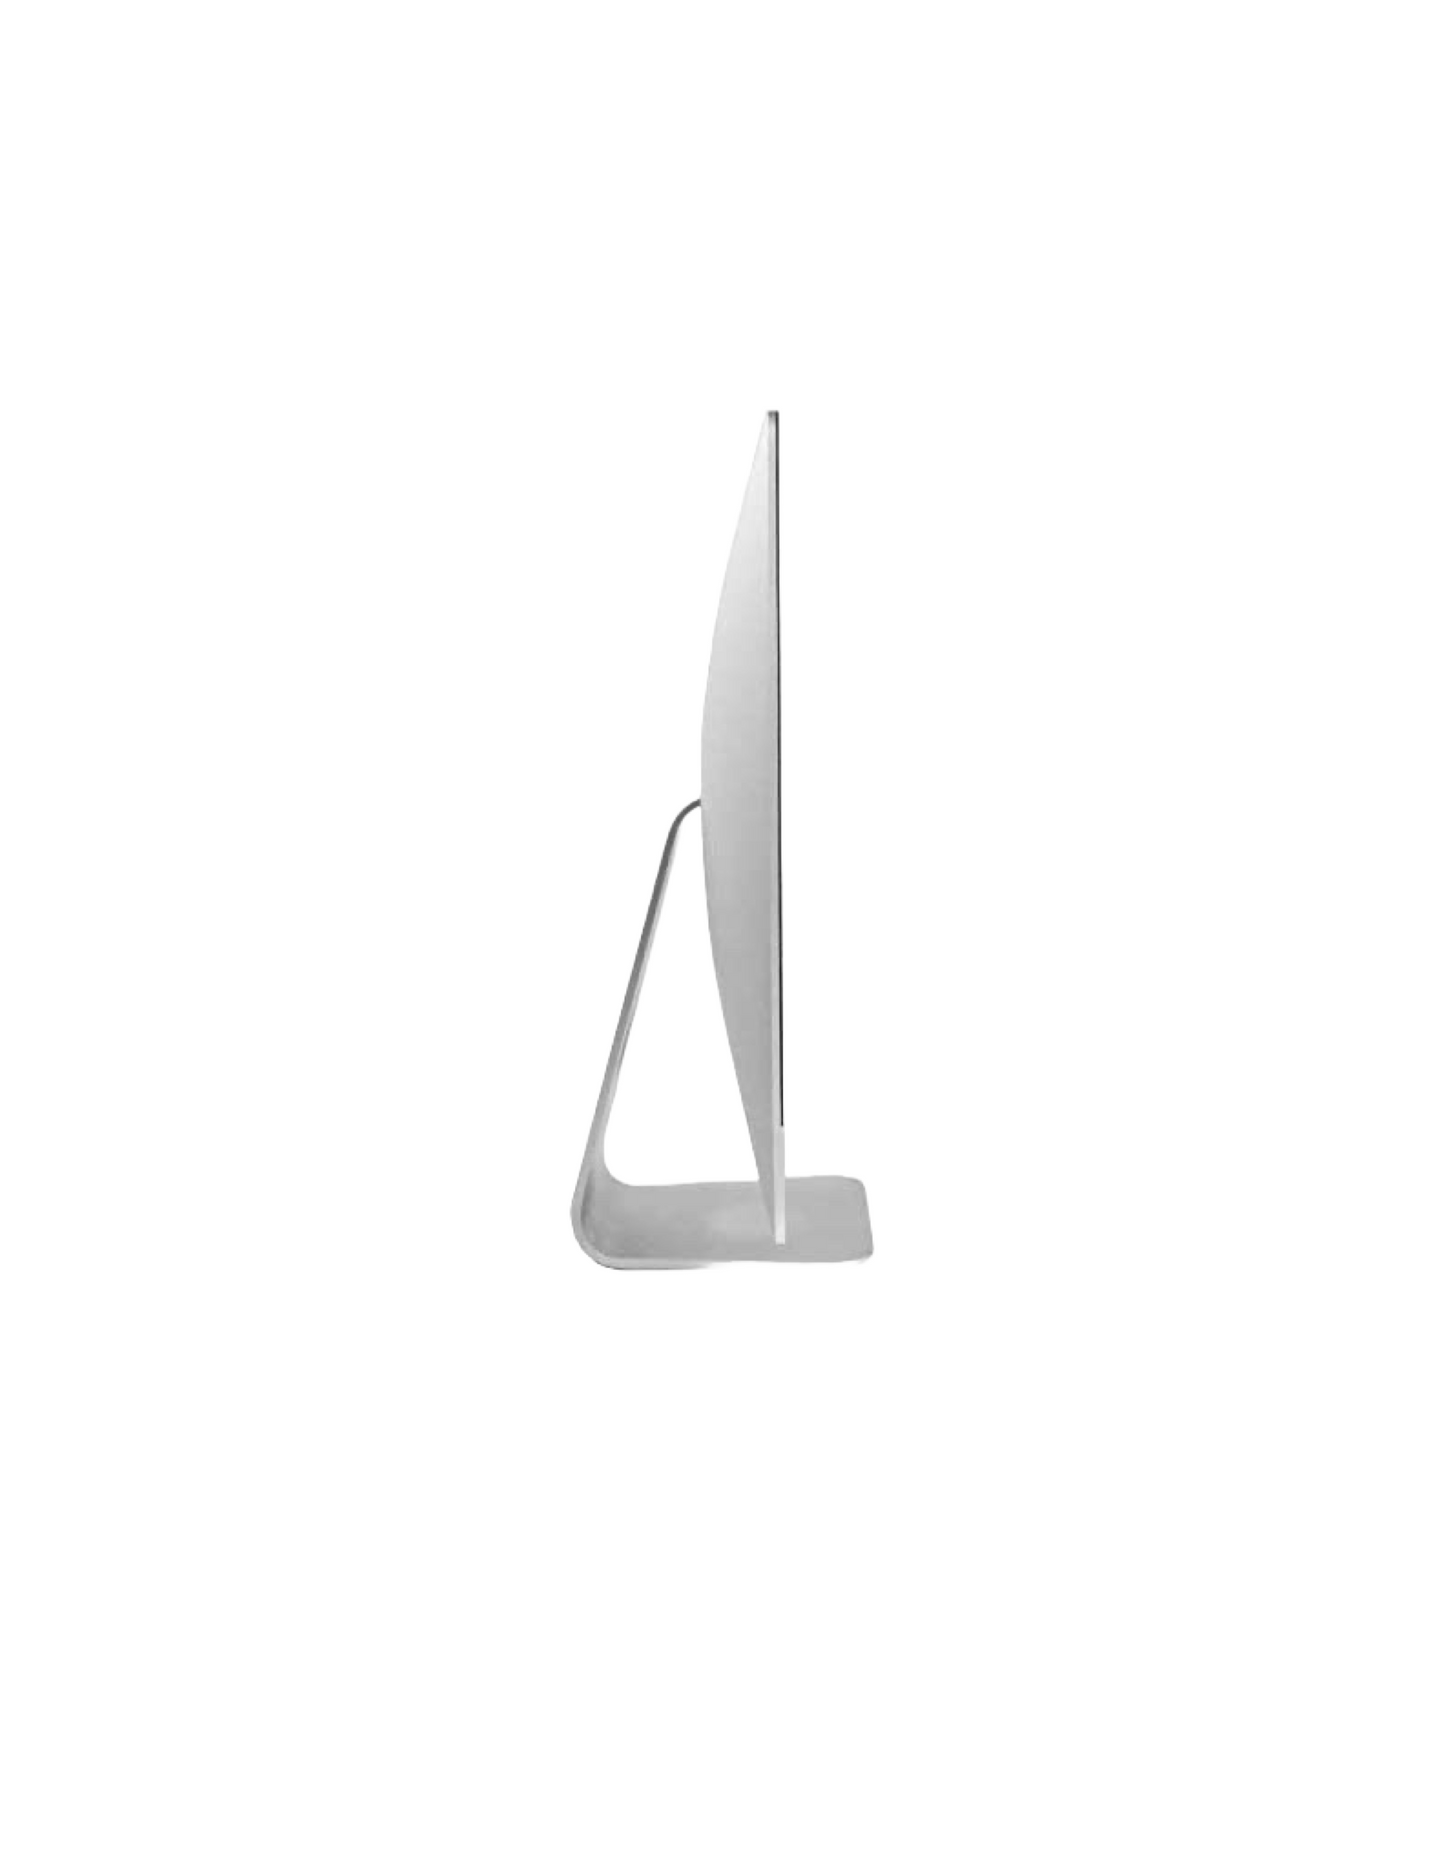 Apple iMac (21.5-inch) – Intel Core i5 (2015) – 1TB HDD